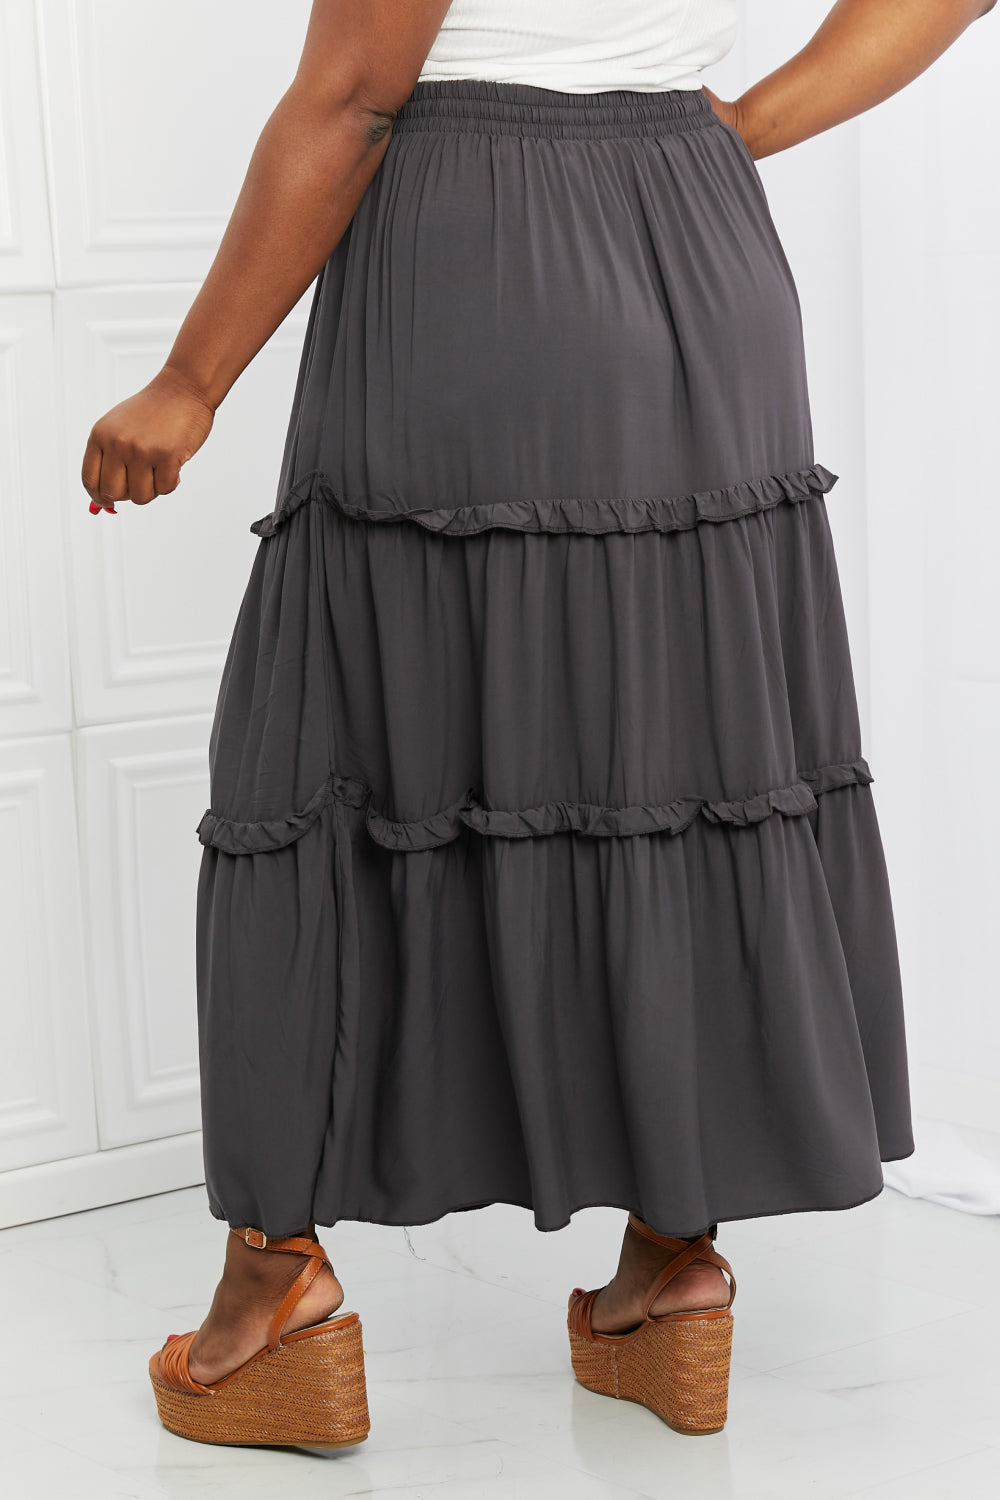 Zenana Summer Days Ruffled Maxi Skirt in Ash Grey